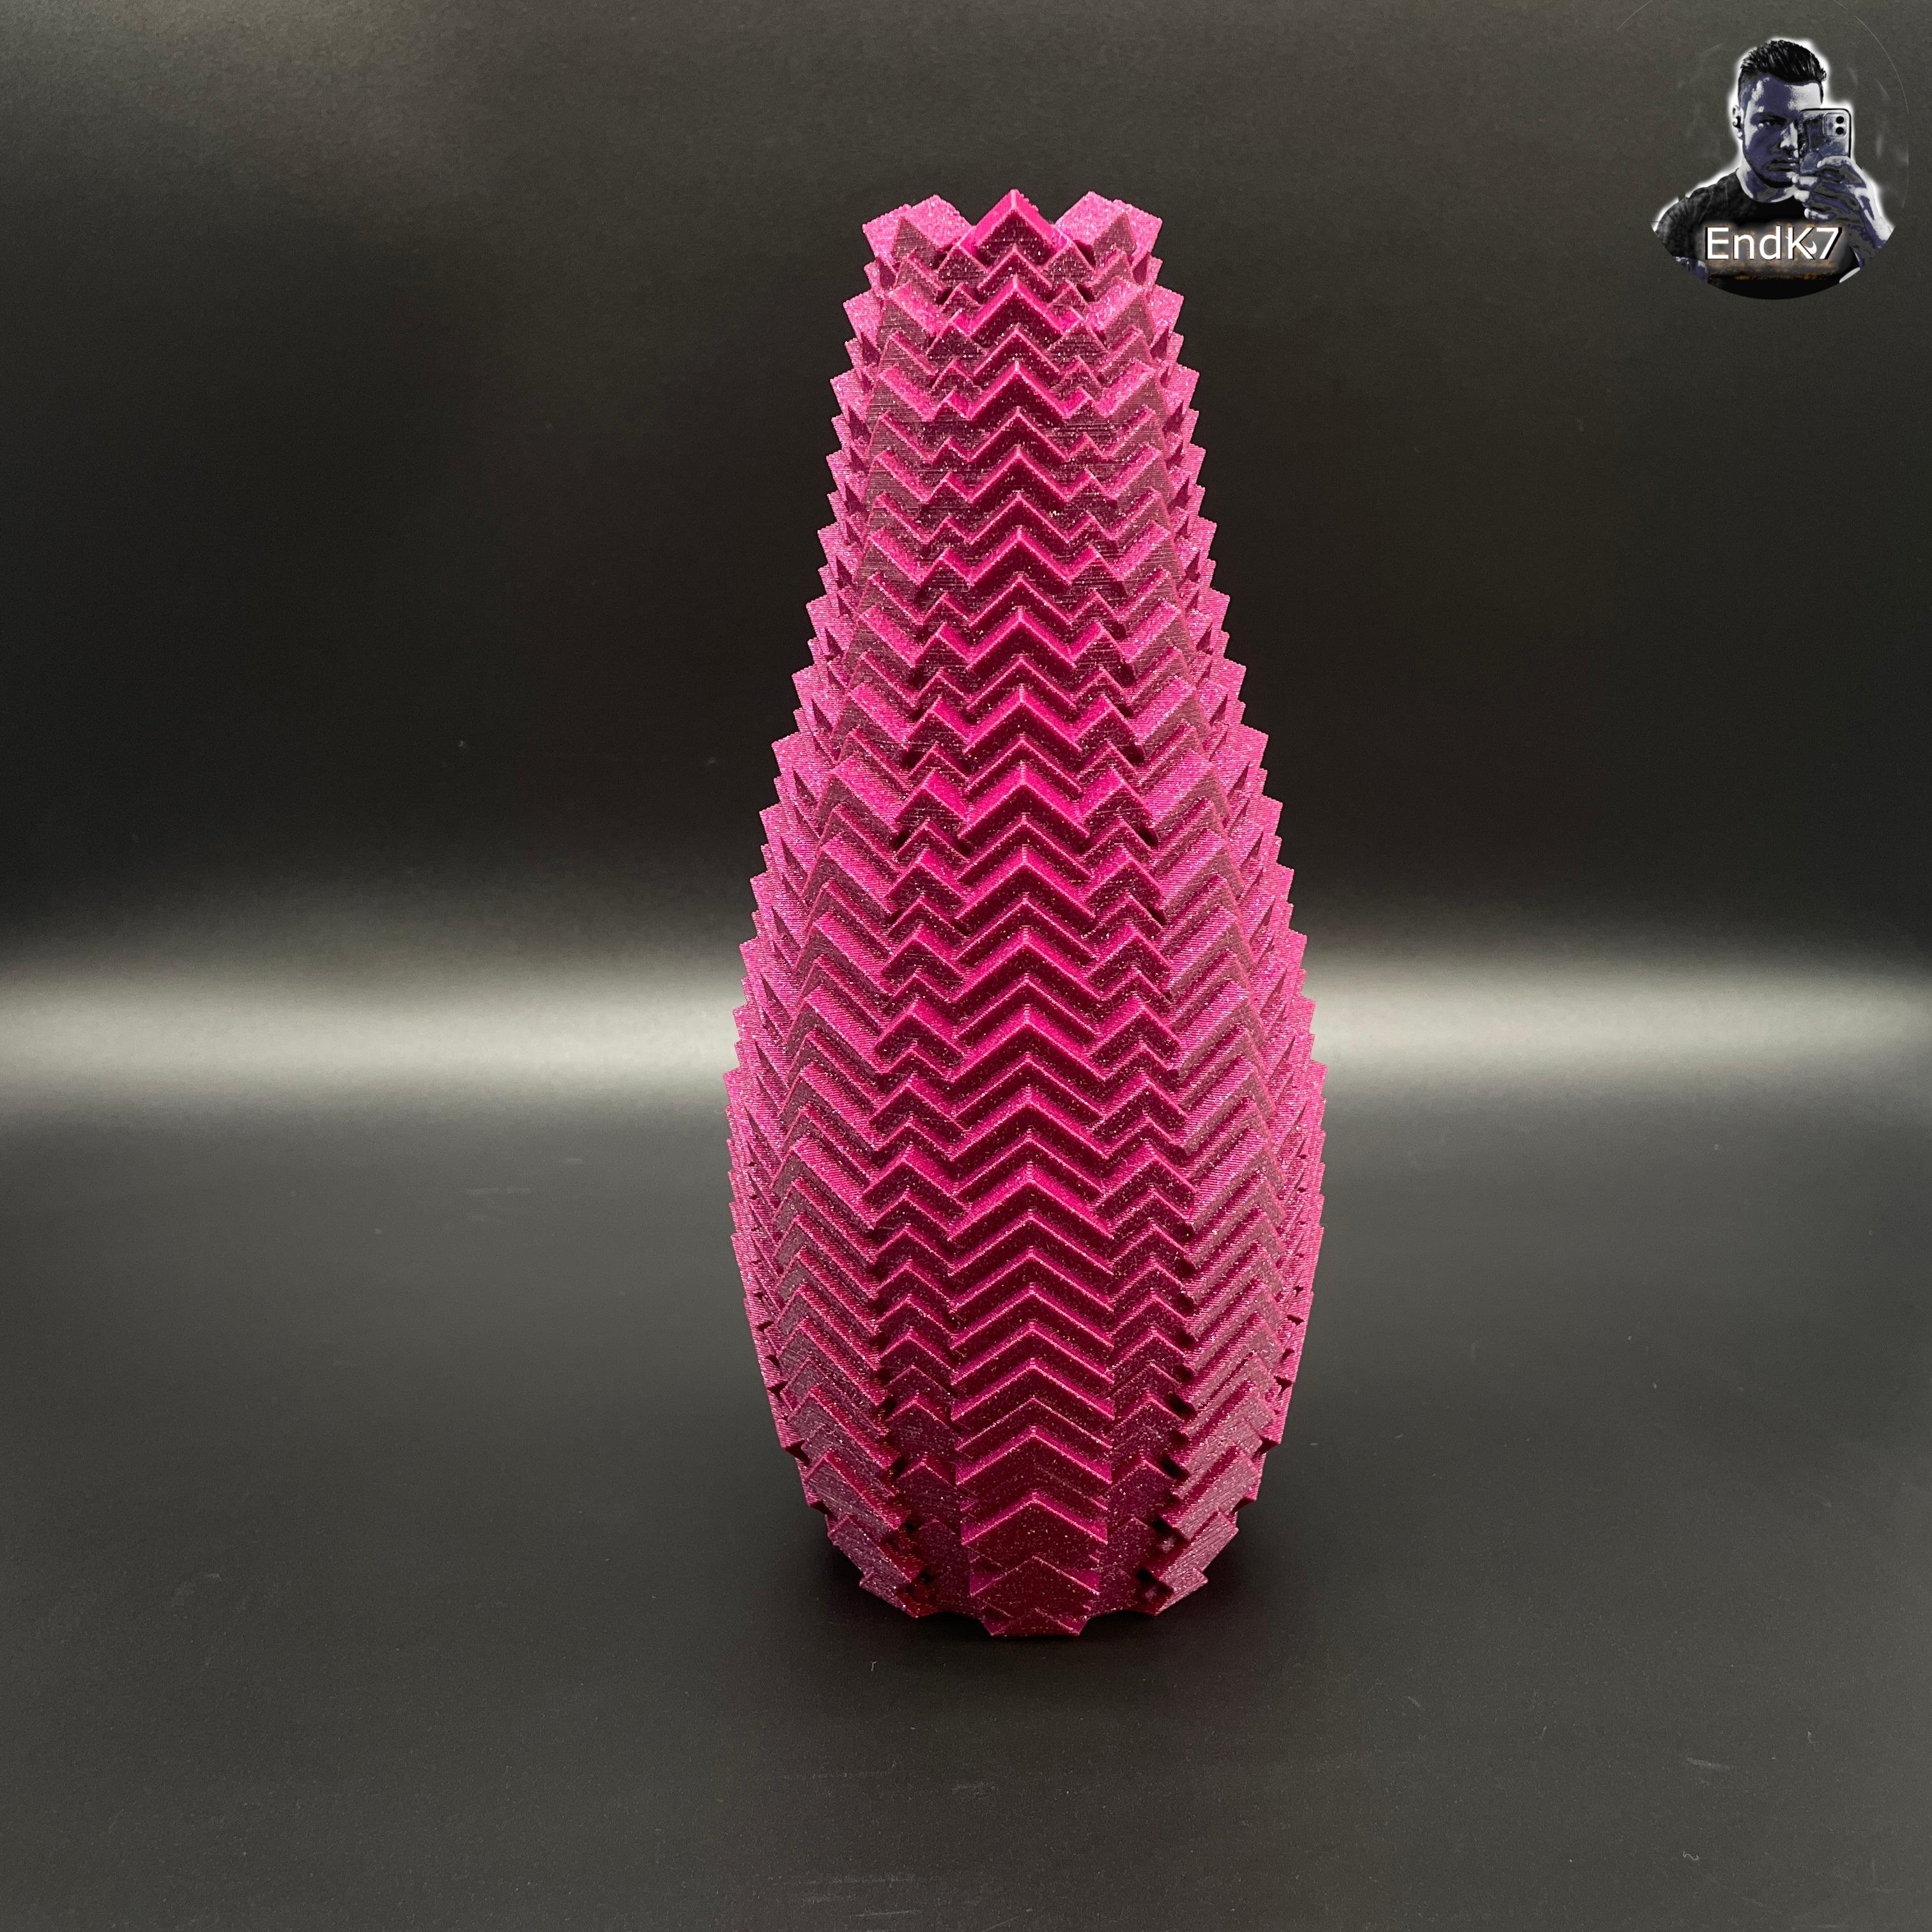 Cubic_Pattern_Vases 3d model